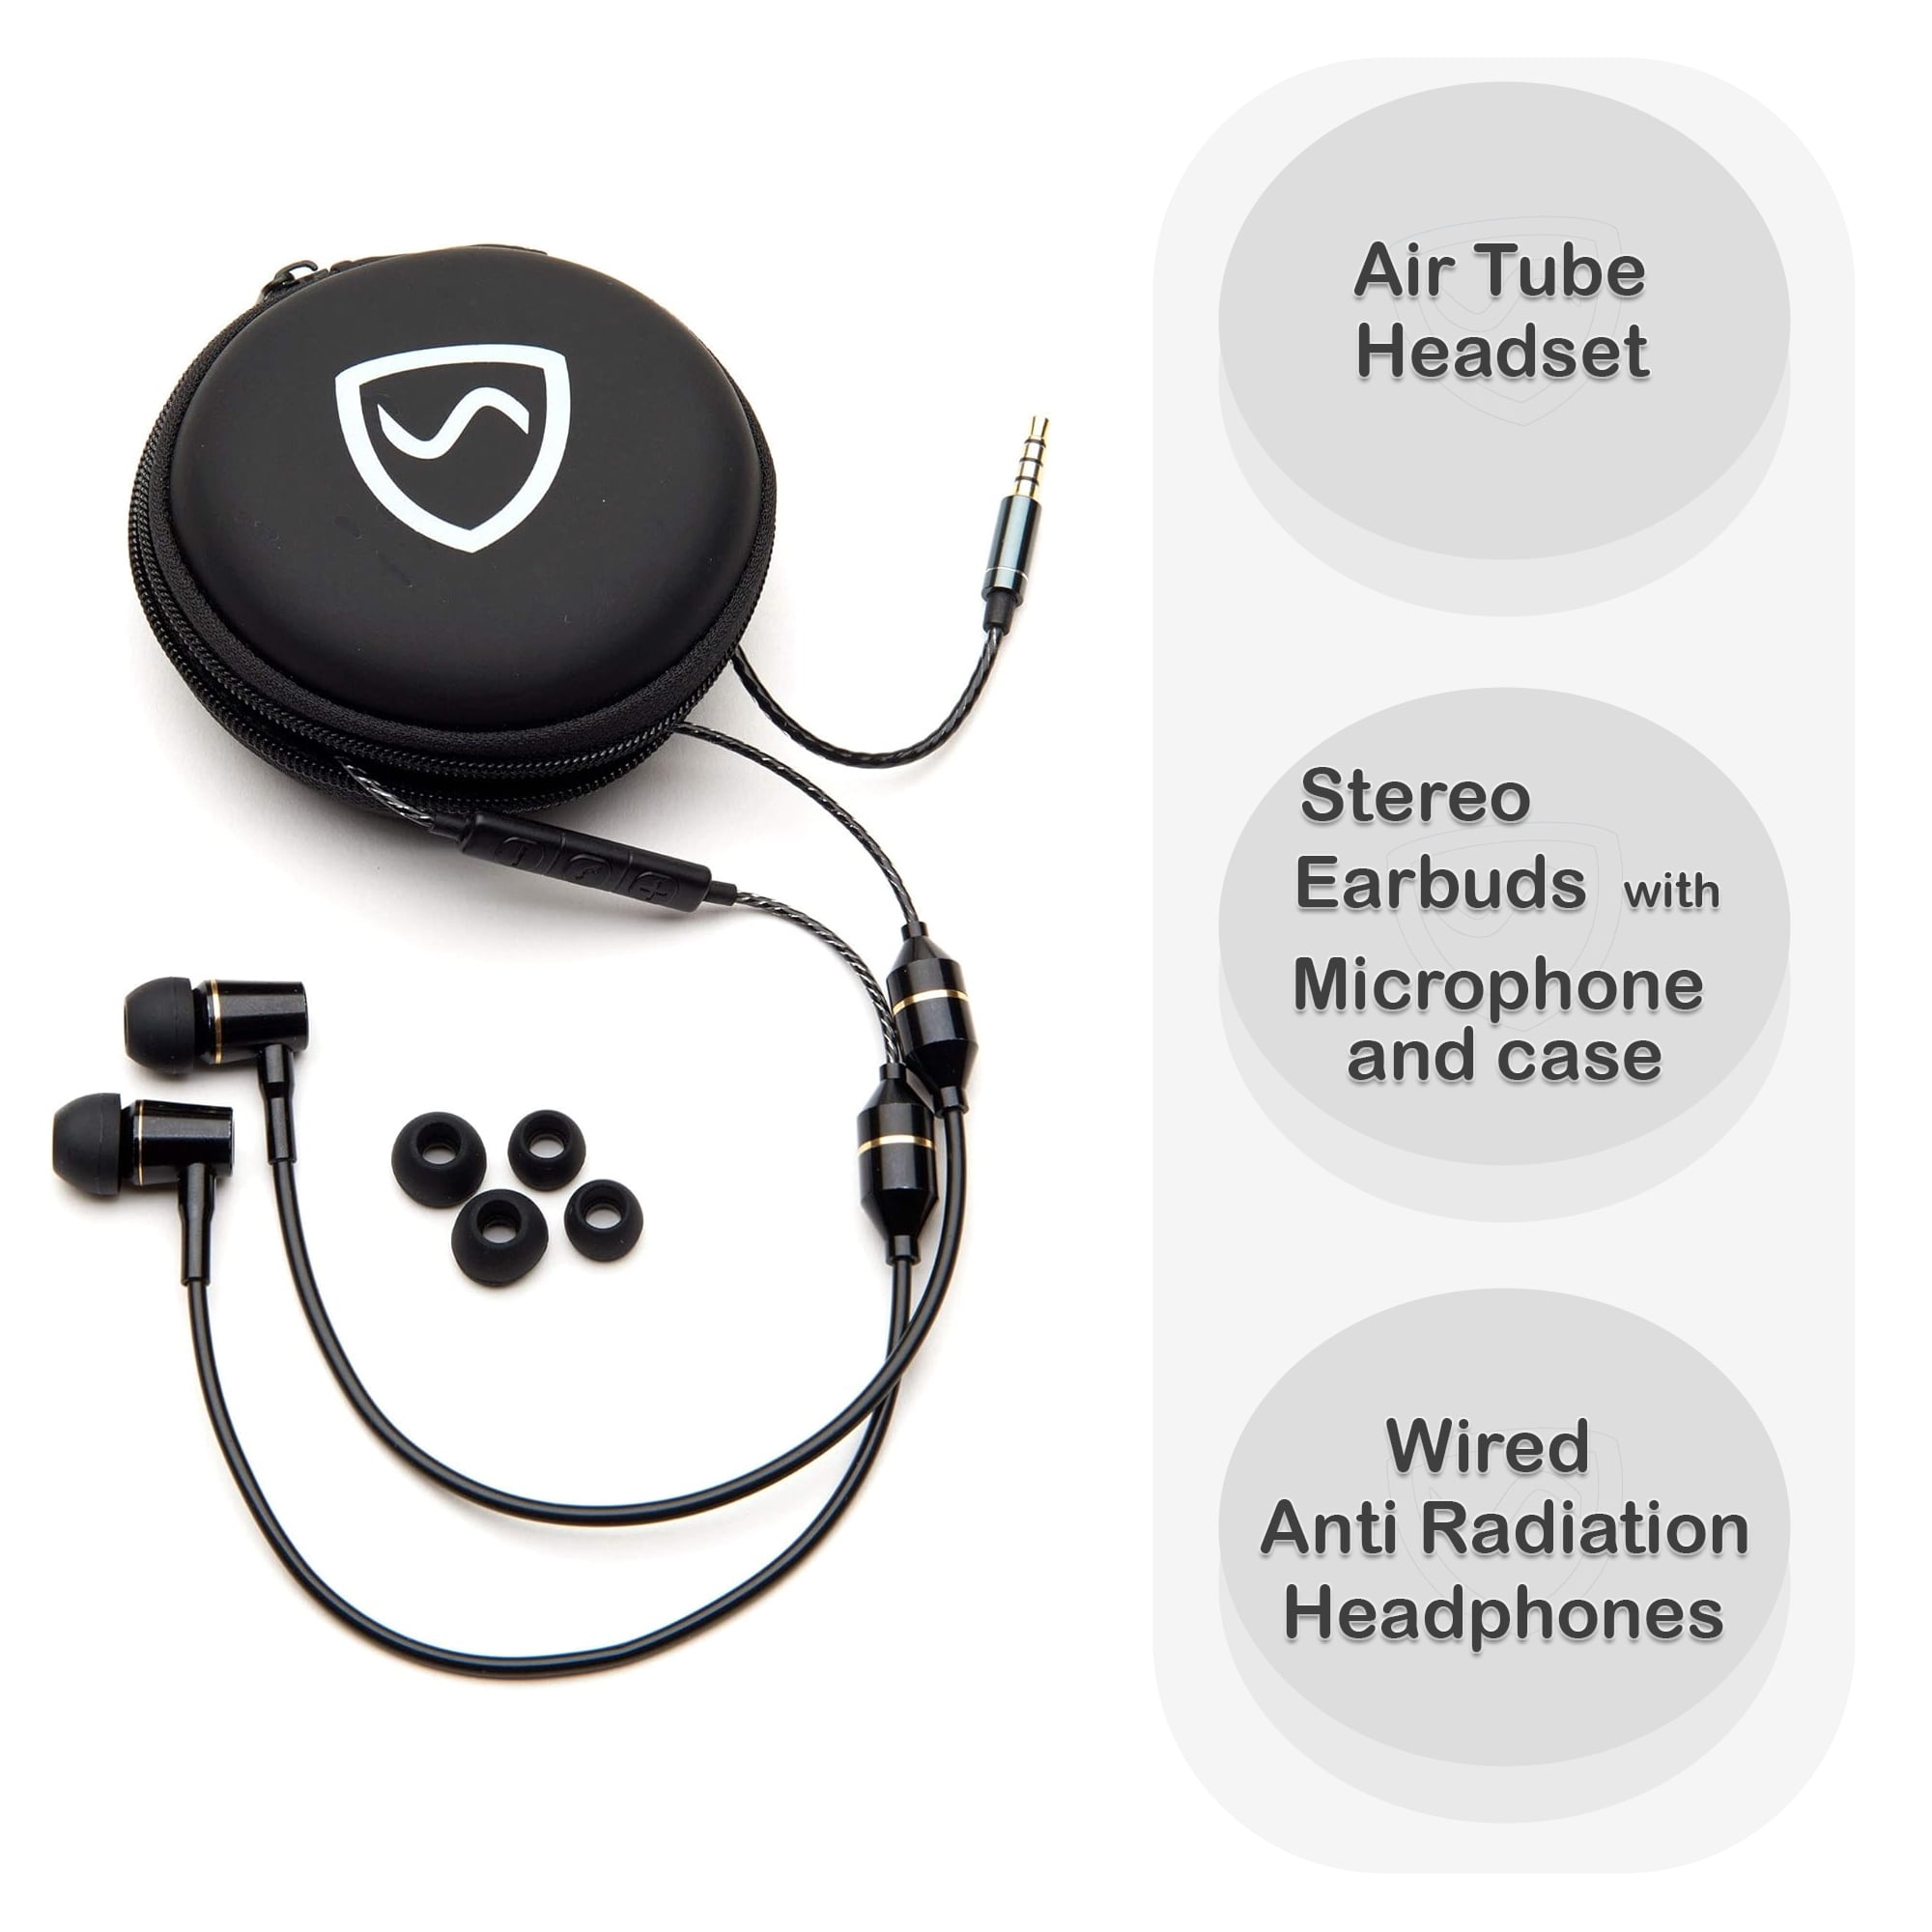 EMF Radiation-Free Earbuds Air Tube Stereo Headphones